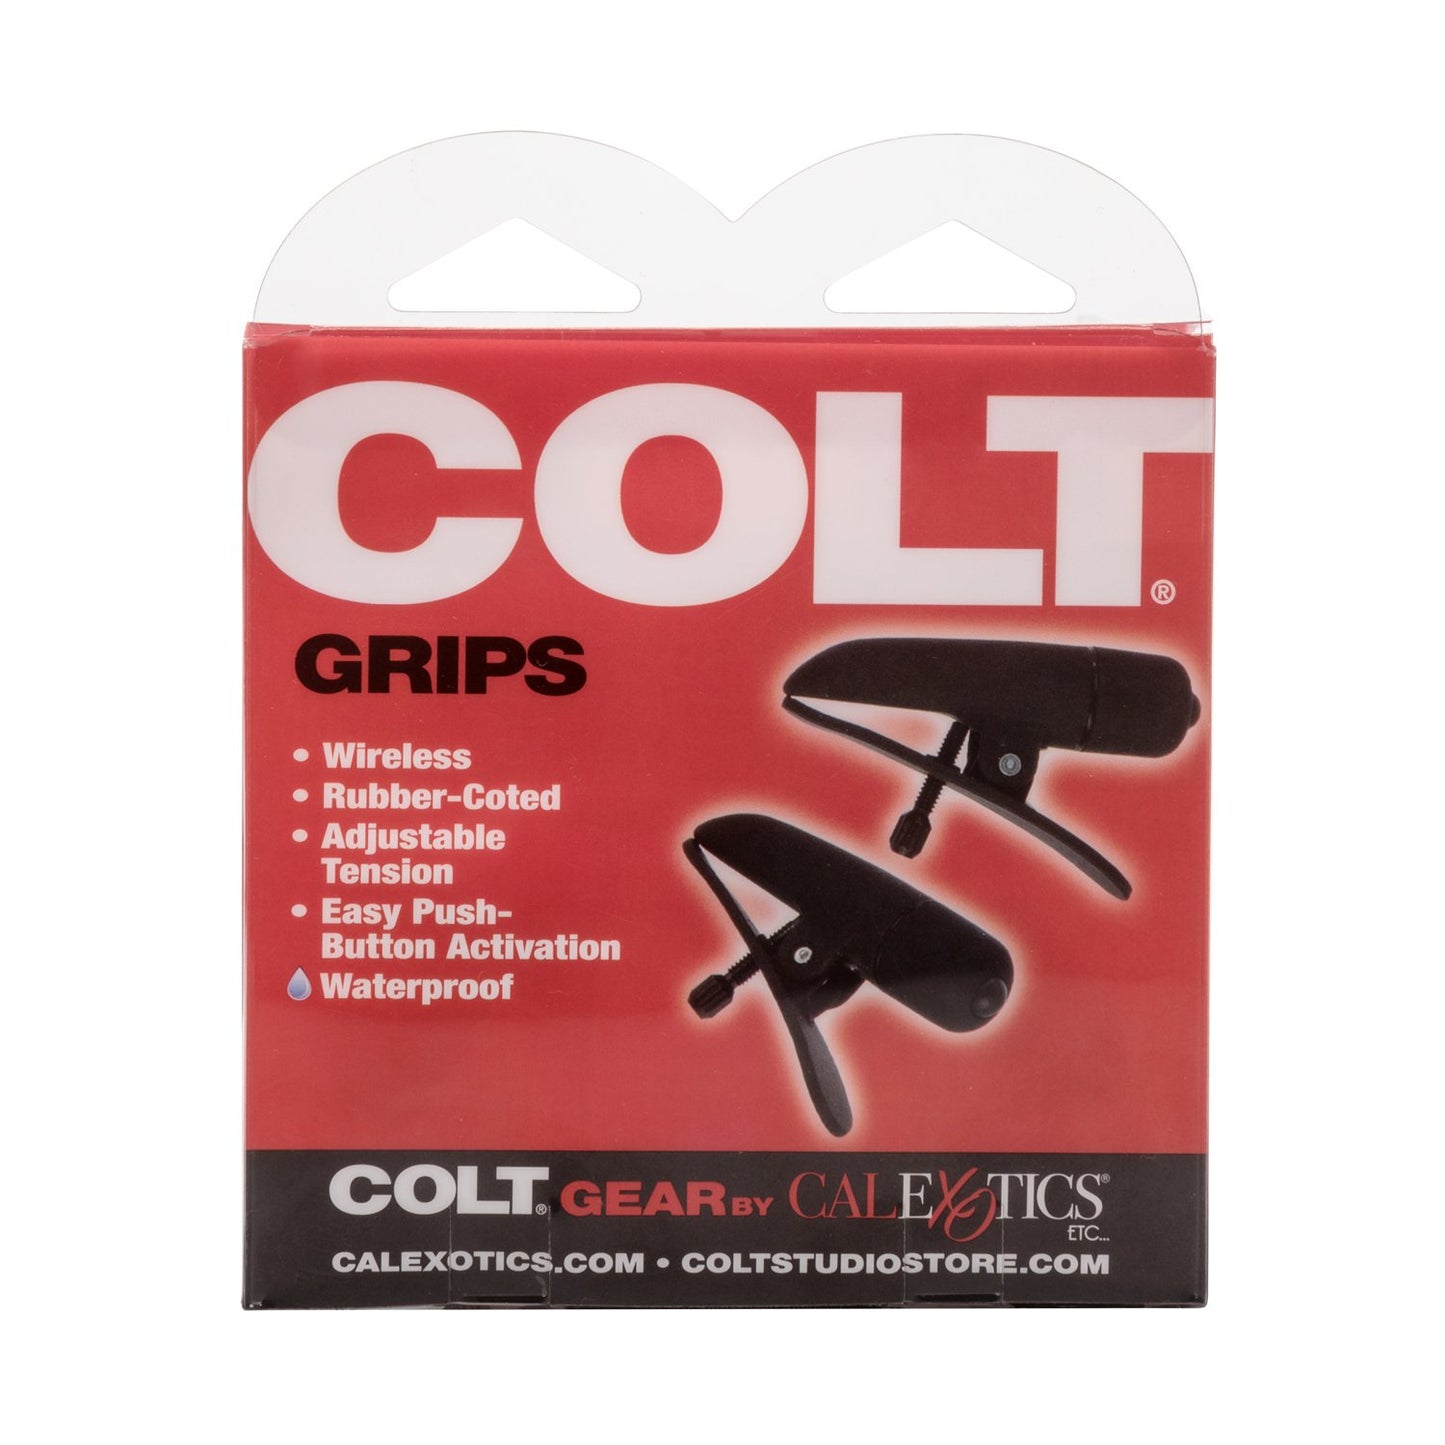 COLT Grips